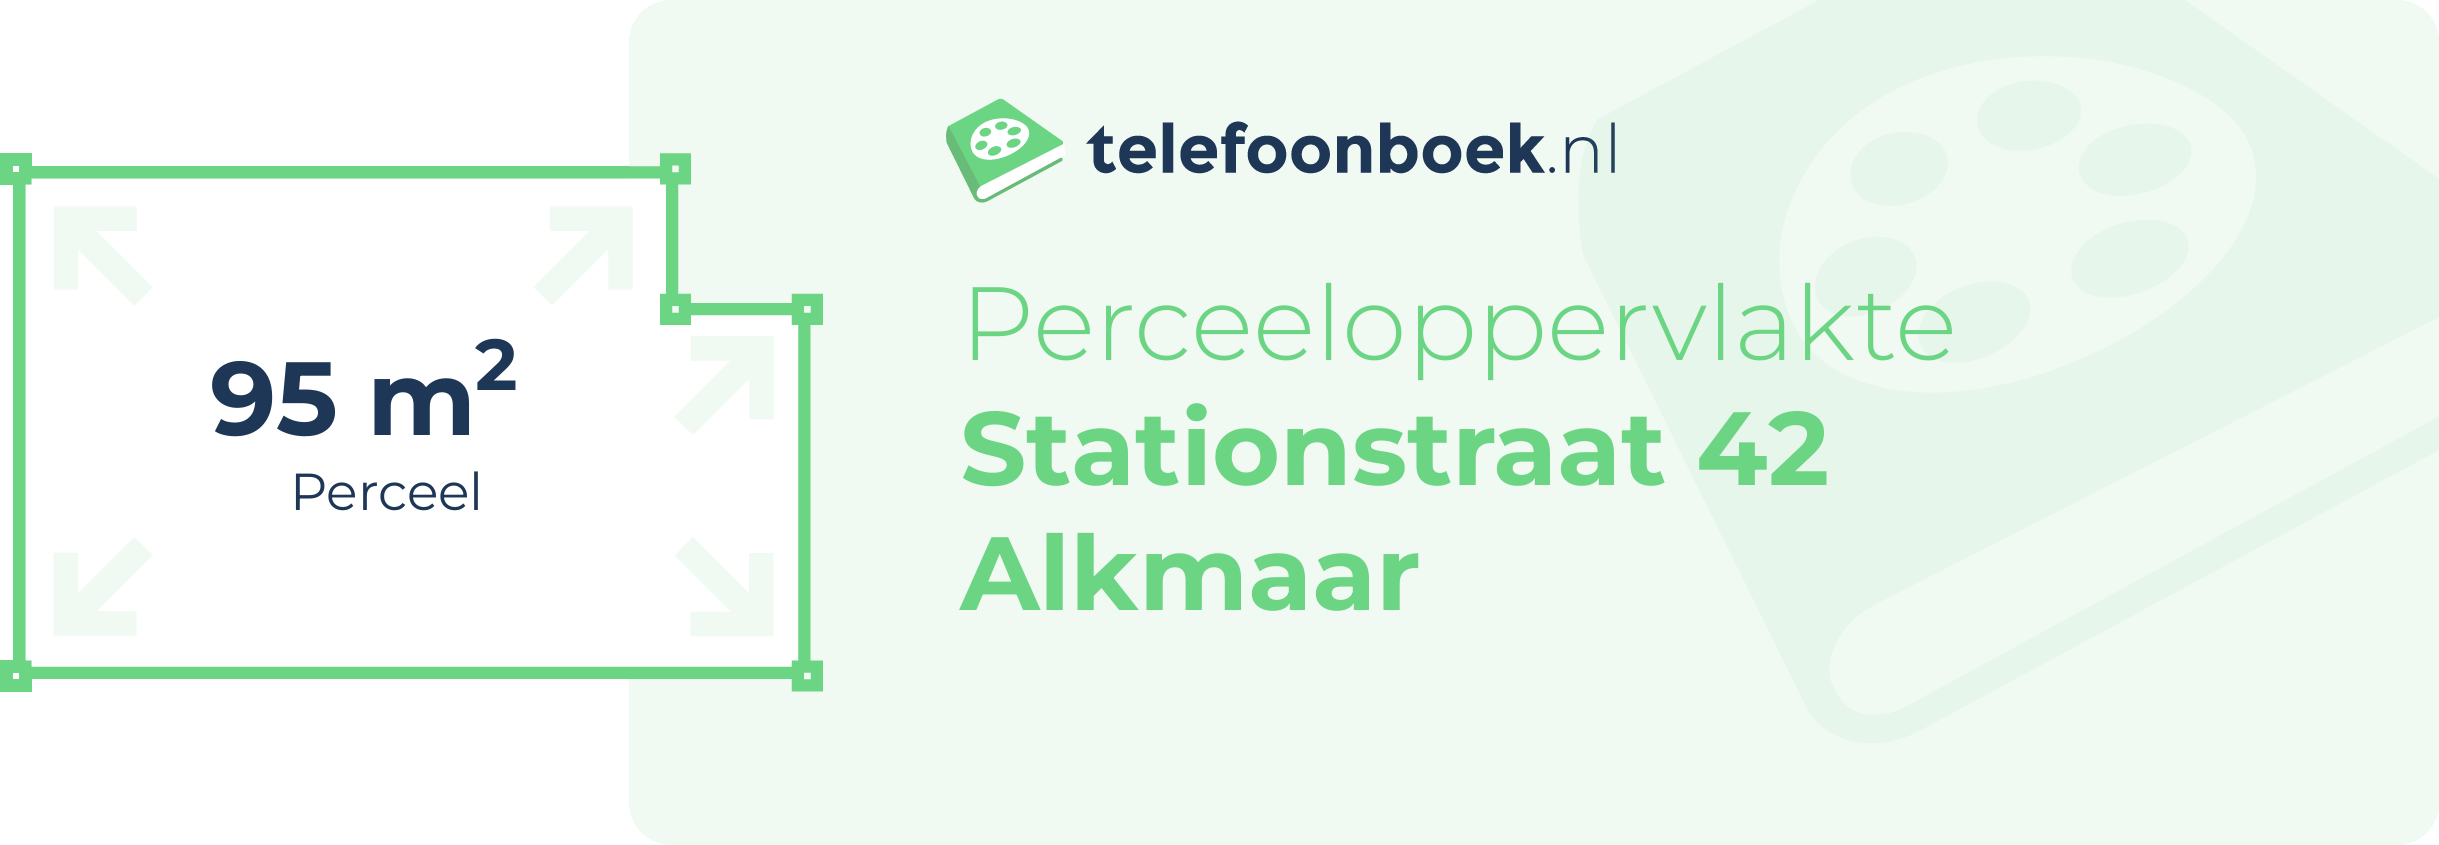 Perceeloppervlakte Stationstraat 42 Alkmaar